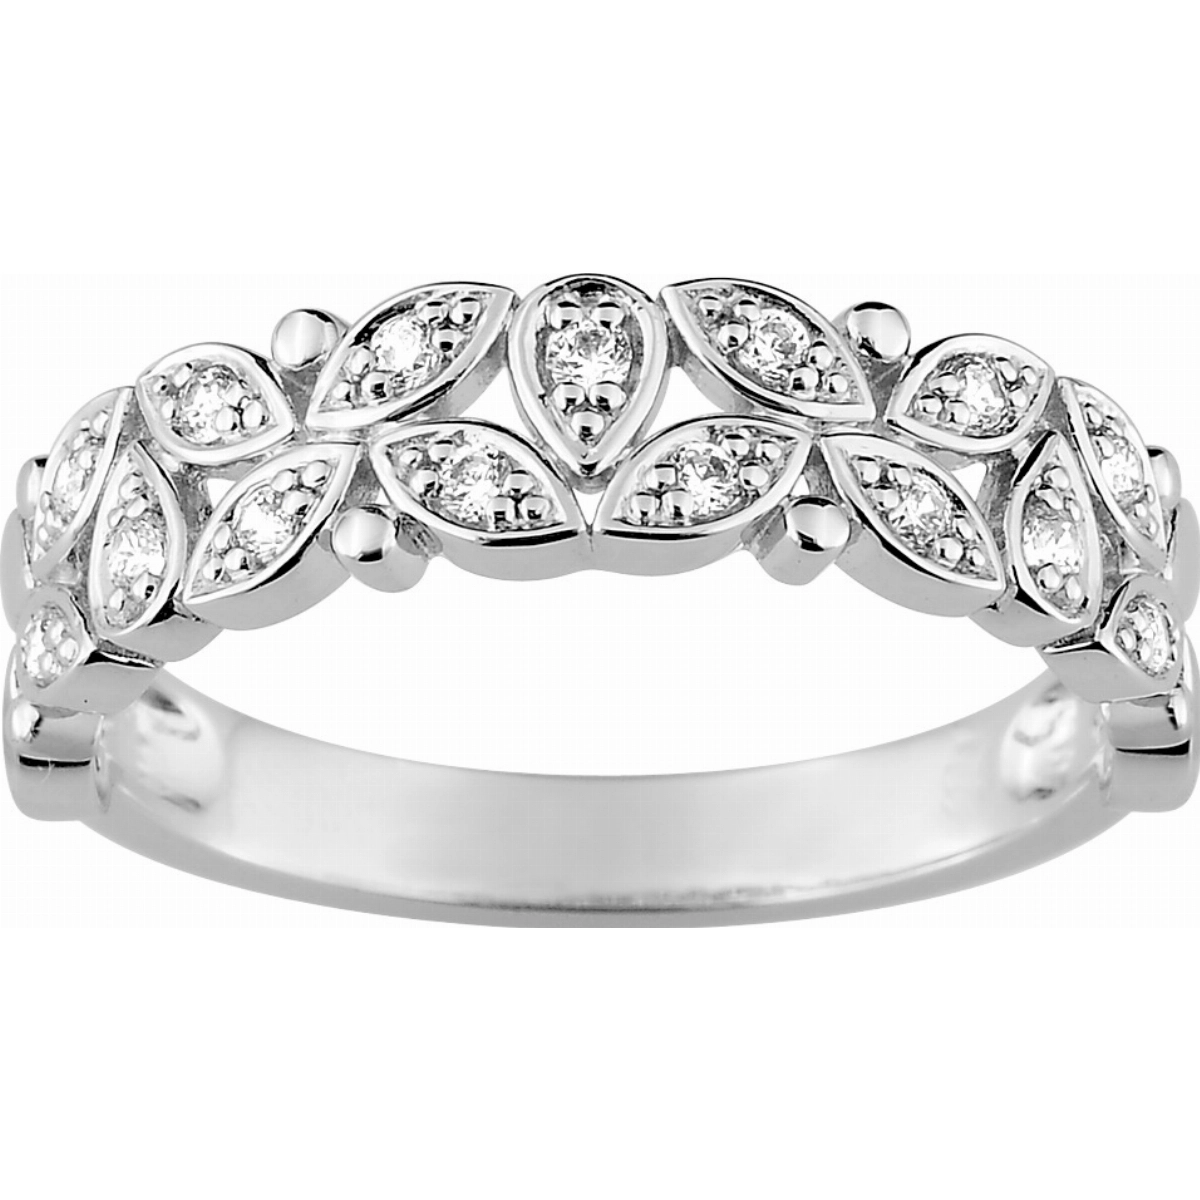 Ring w. cz rh925 Silver Lua Blanca  450009.9 - Size 49